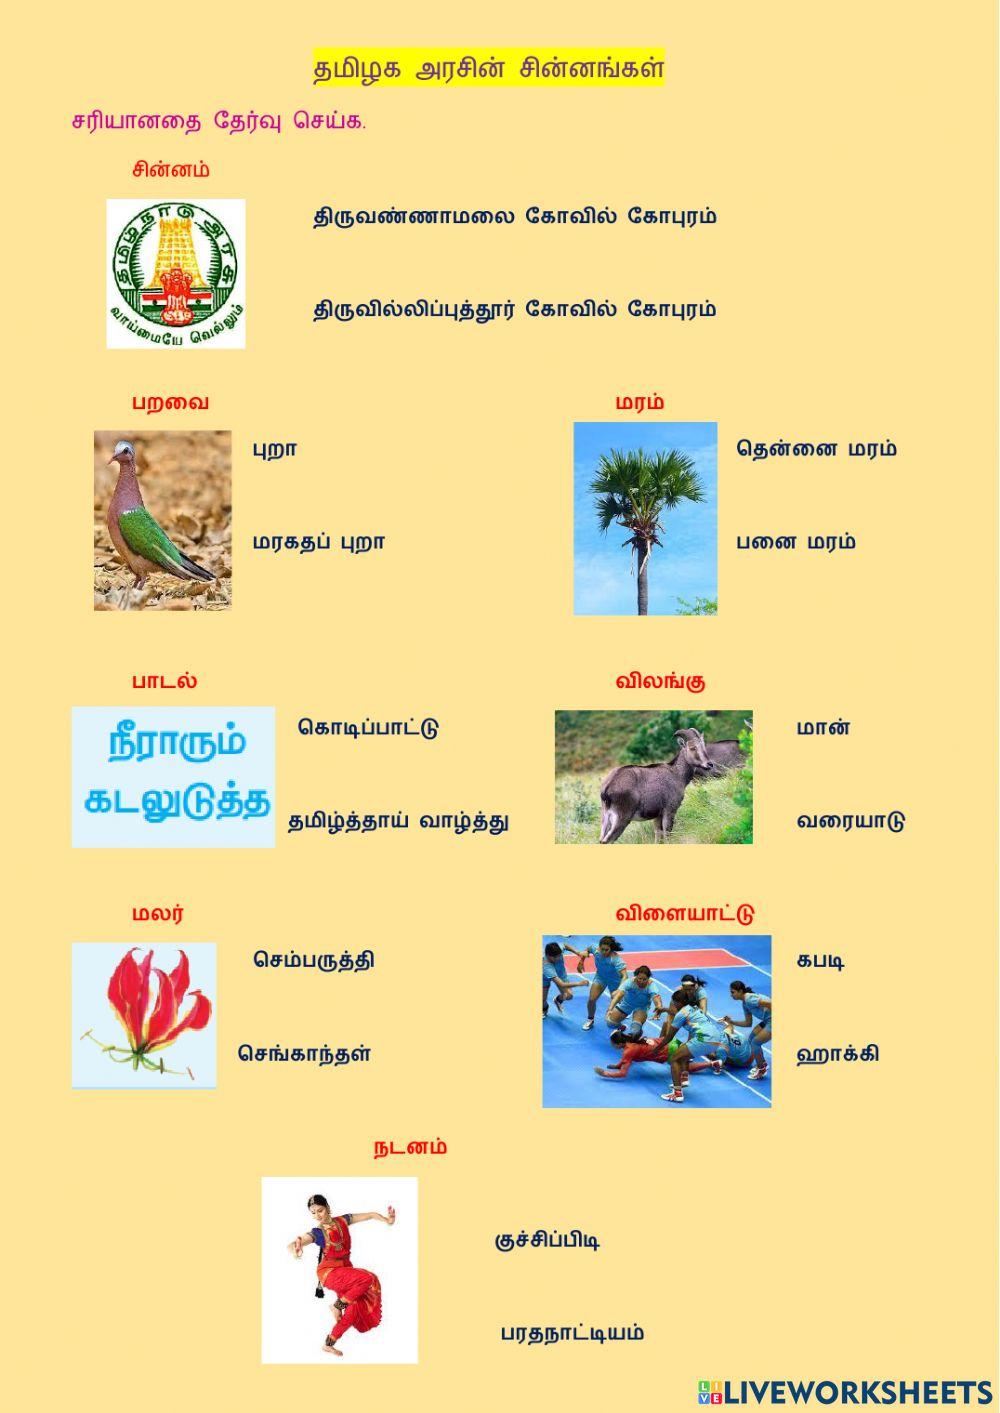 Tamilnadu state symbols